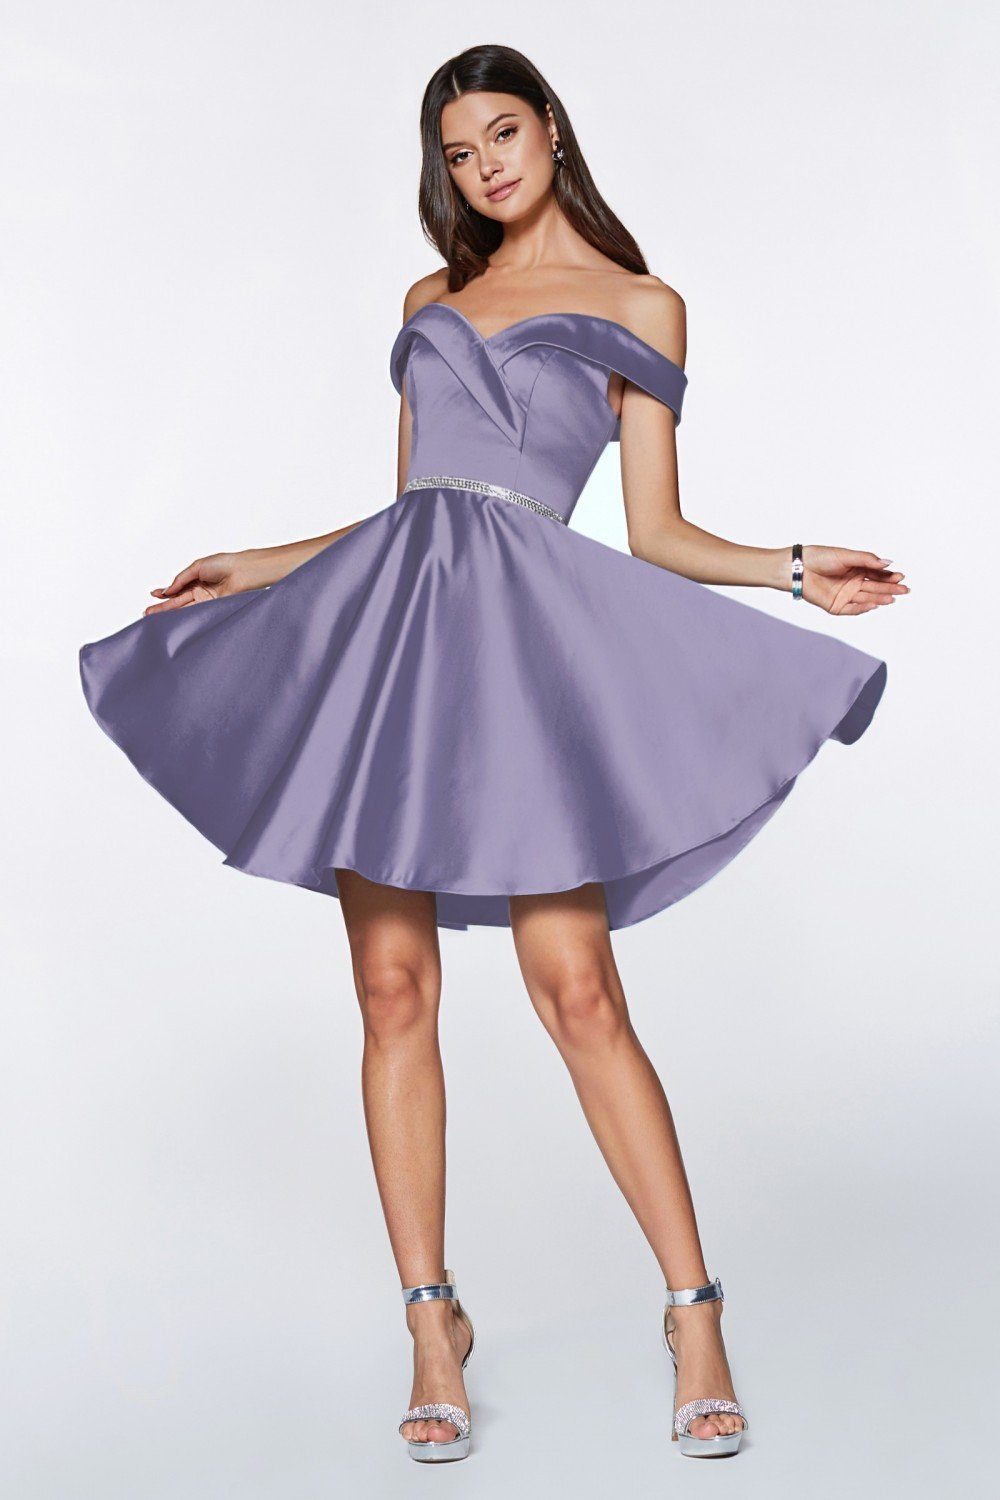 Short Off the Shoulder Satin Dress by Cinderella Divine CD0140-Short Cocktail Dresses-ABC Fashion